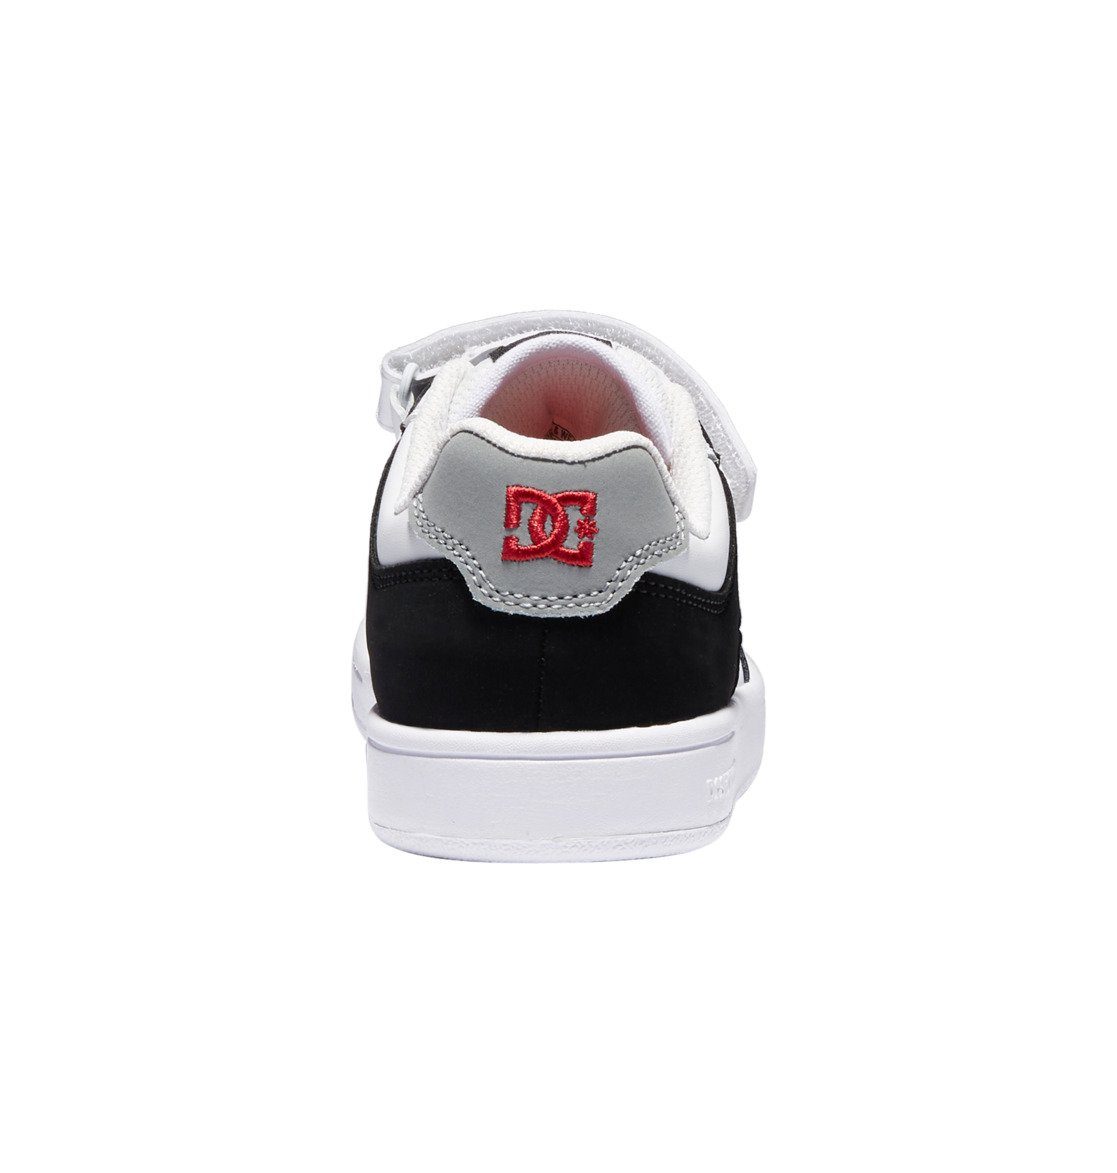 Sneaker Manteca Shoes Black/White/Red V 4 DC